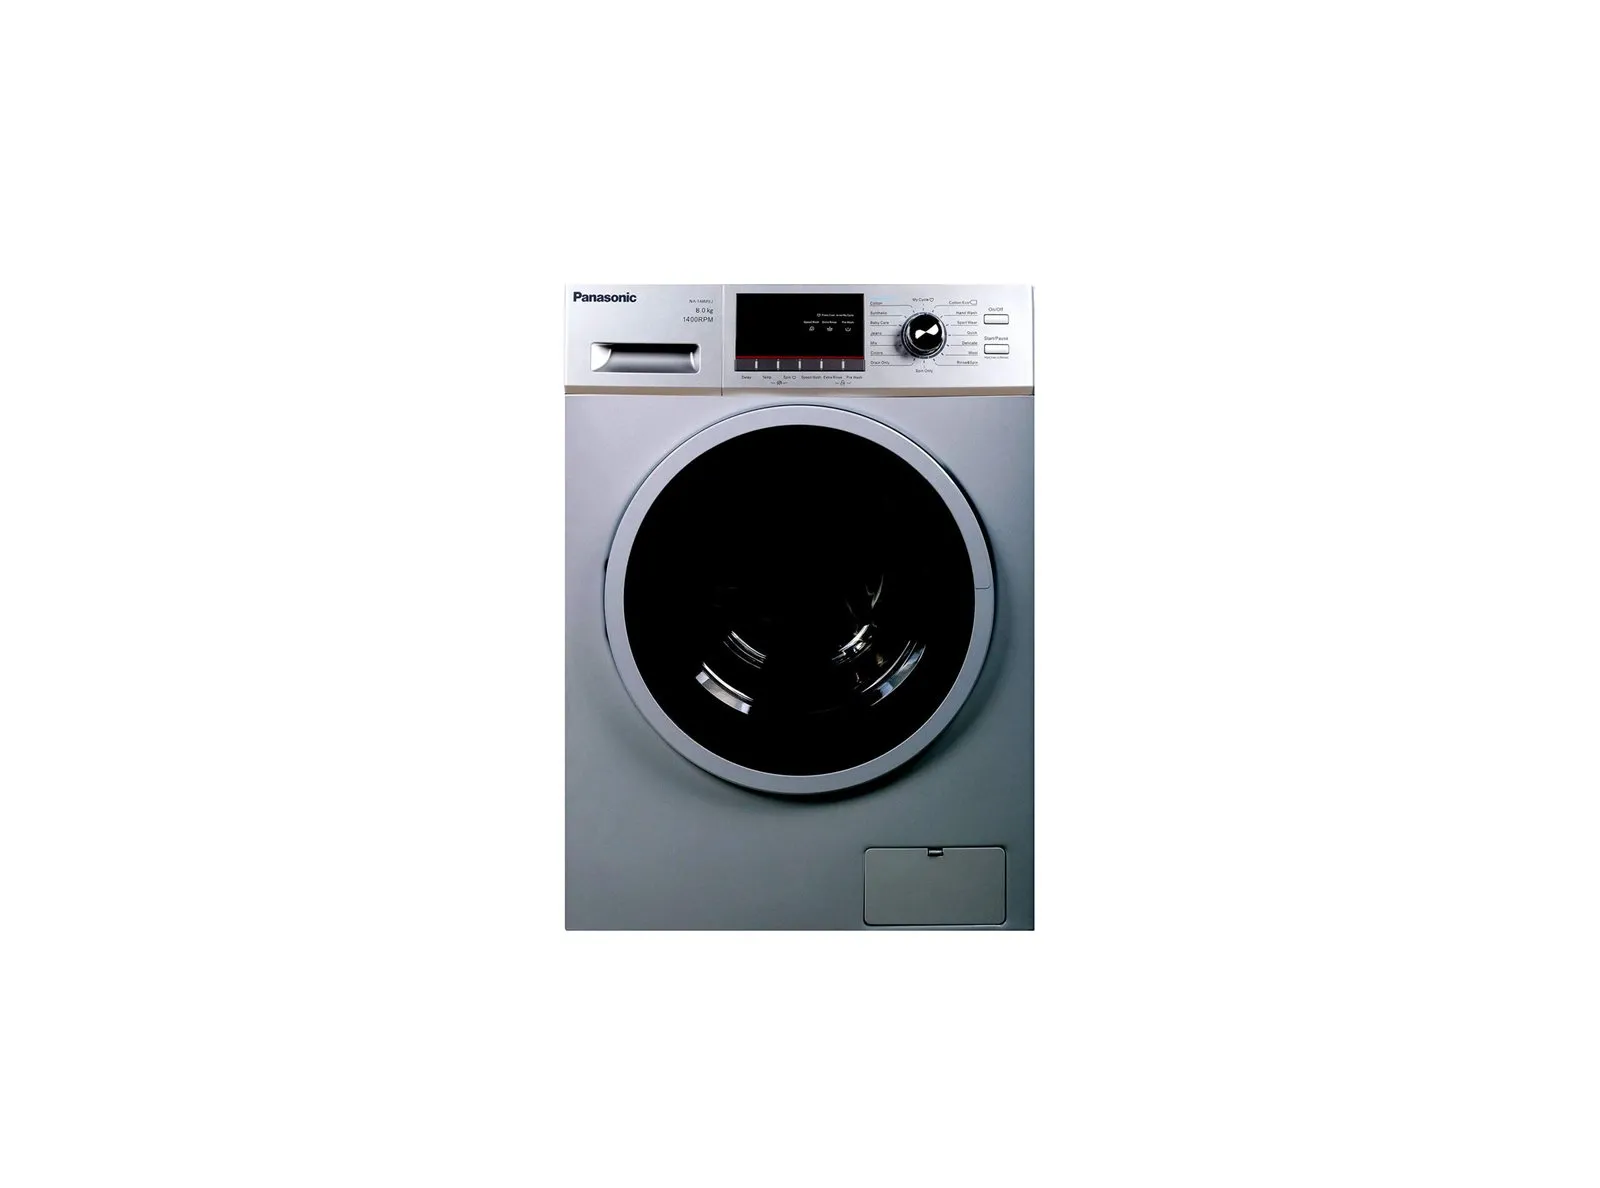 Panasonic 8 kg Front Load Washing Machine Silver Model NA-148MB3 | 1 Year Full 10 Years Motor Warranty.